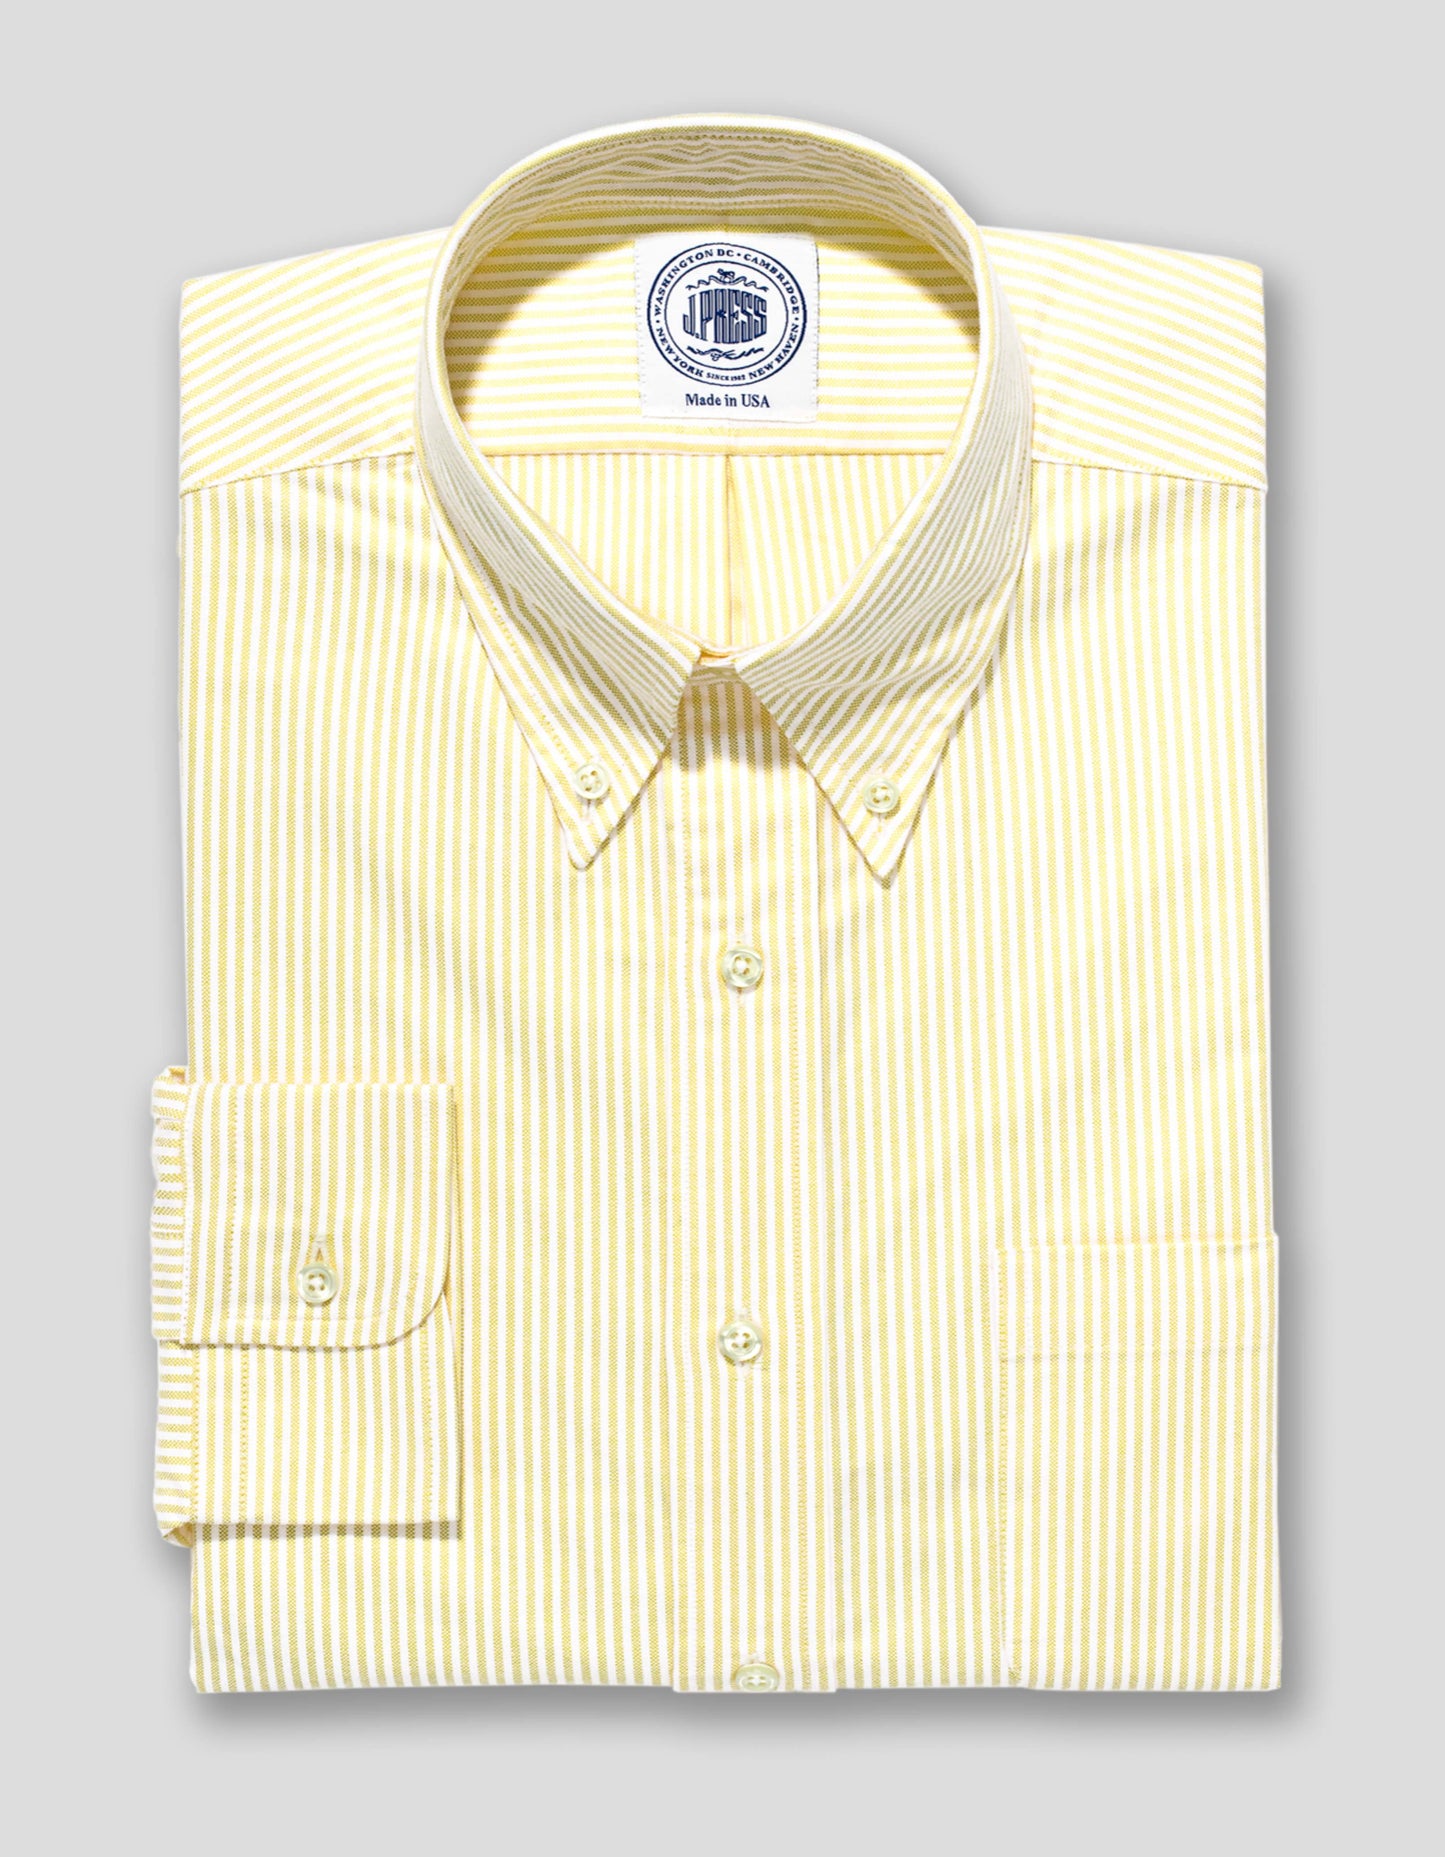 YELLOW/WHITE OXFORD DRESS SHIRT